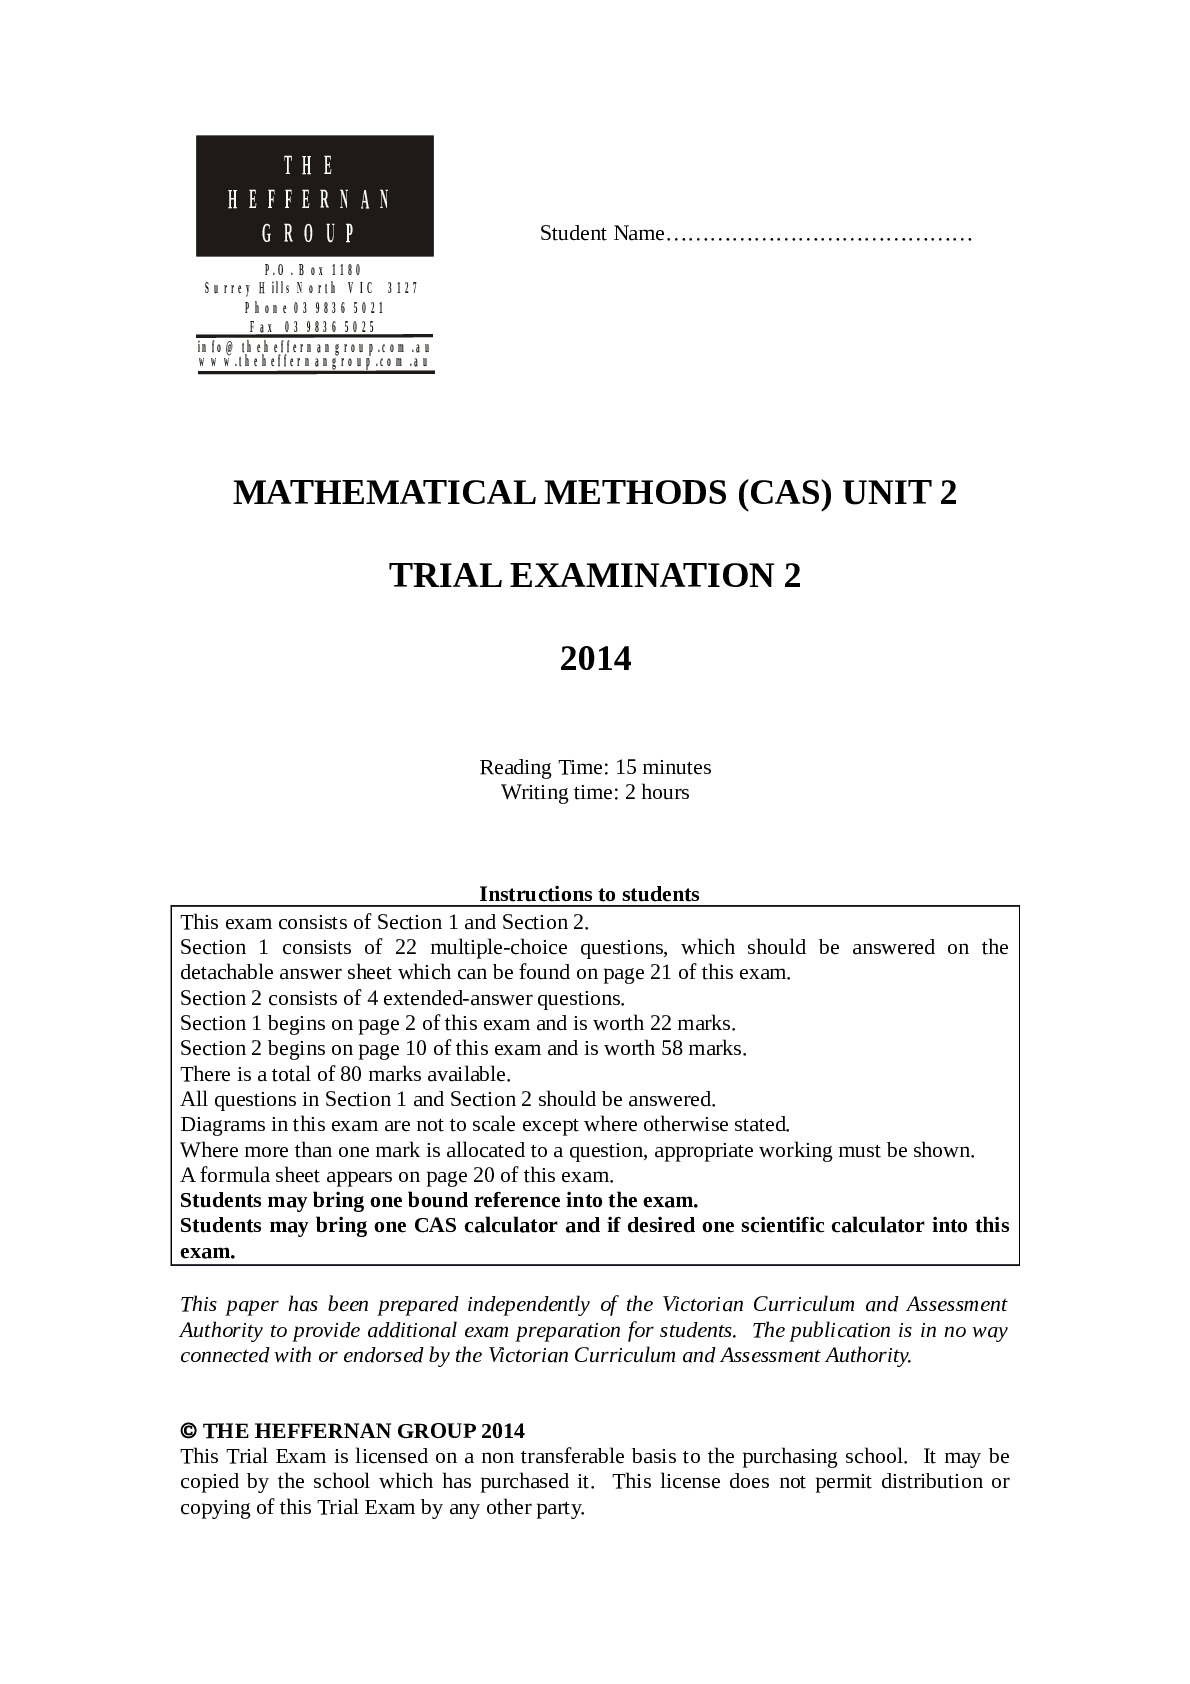 2014_Trial_Exam_Unit_2.docx